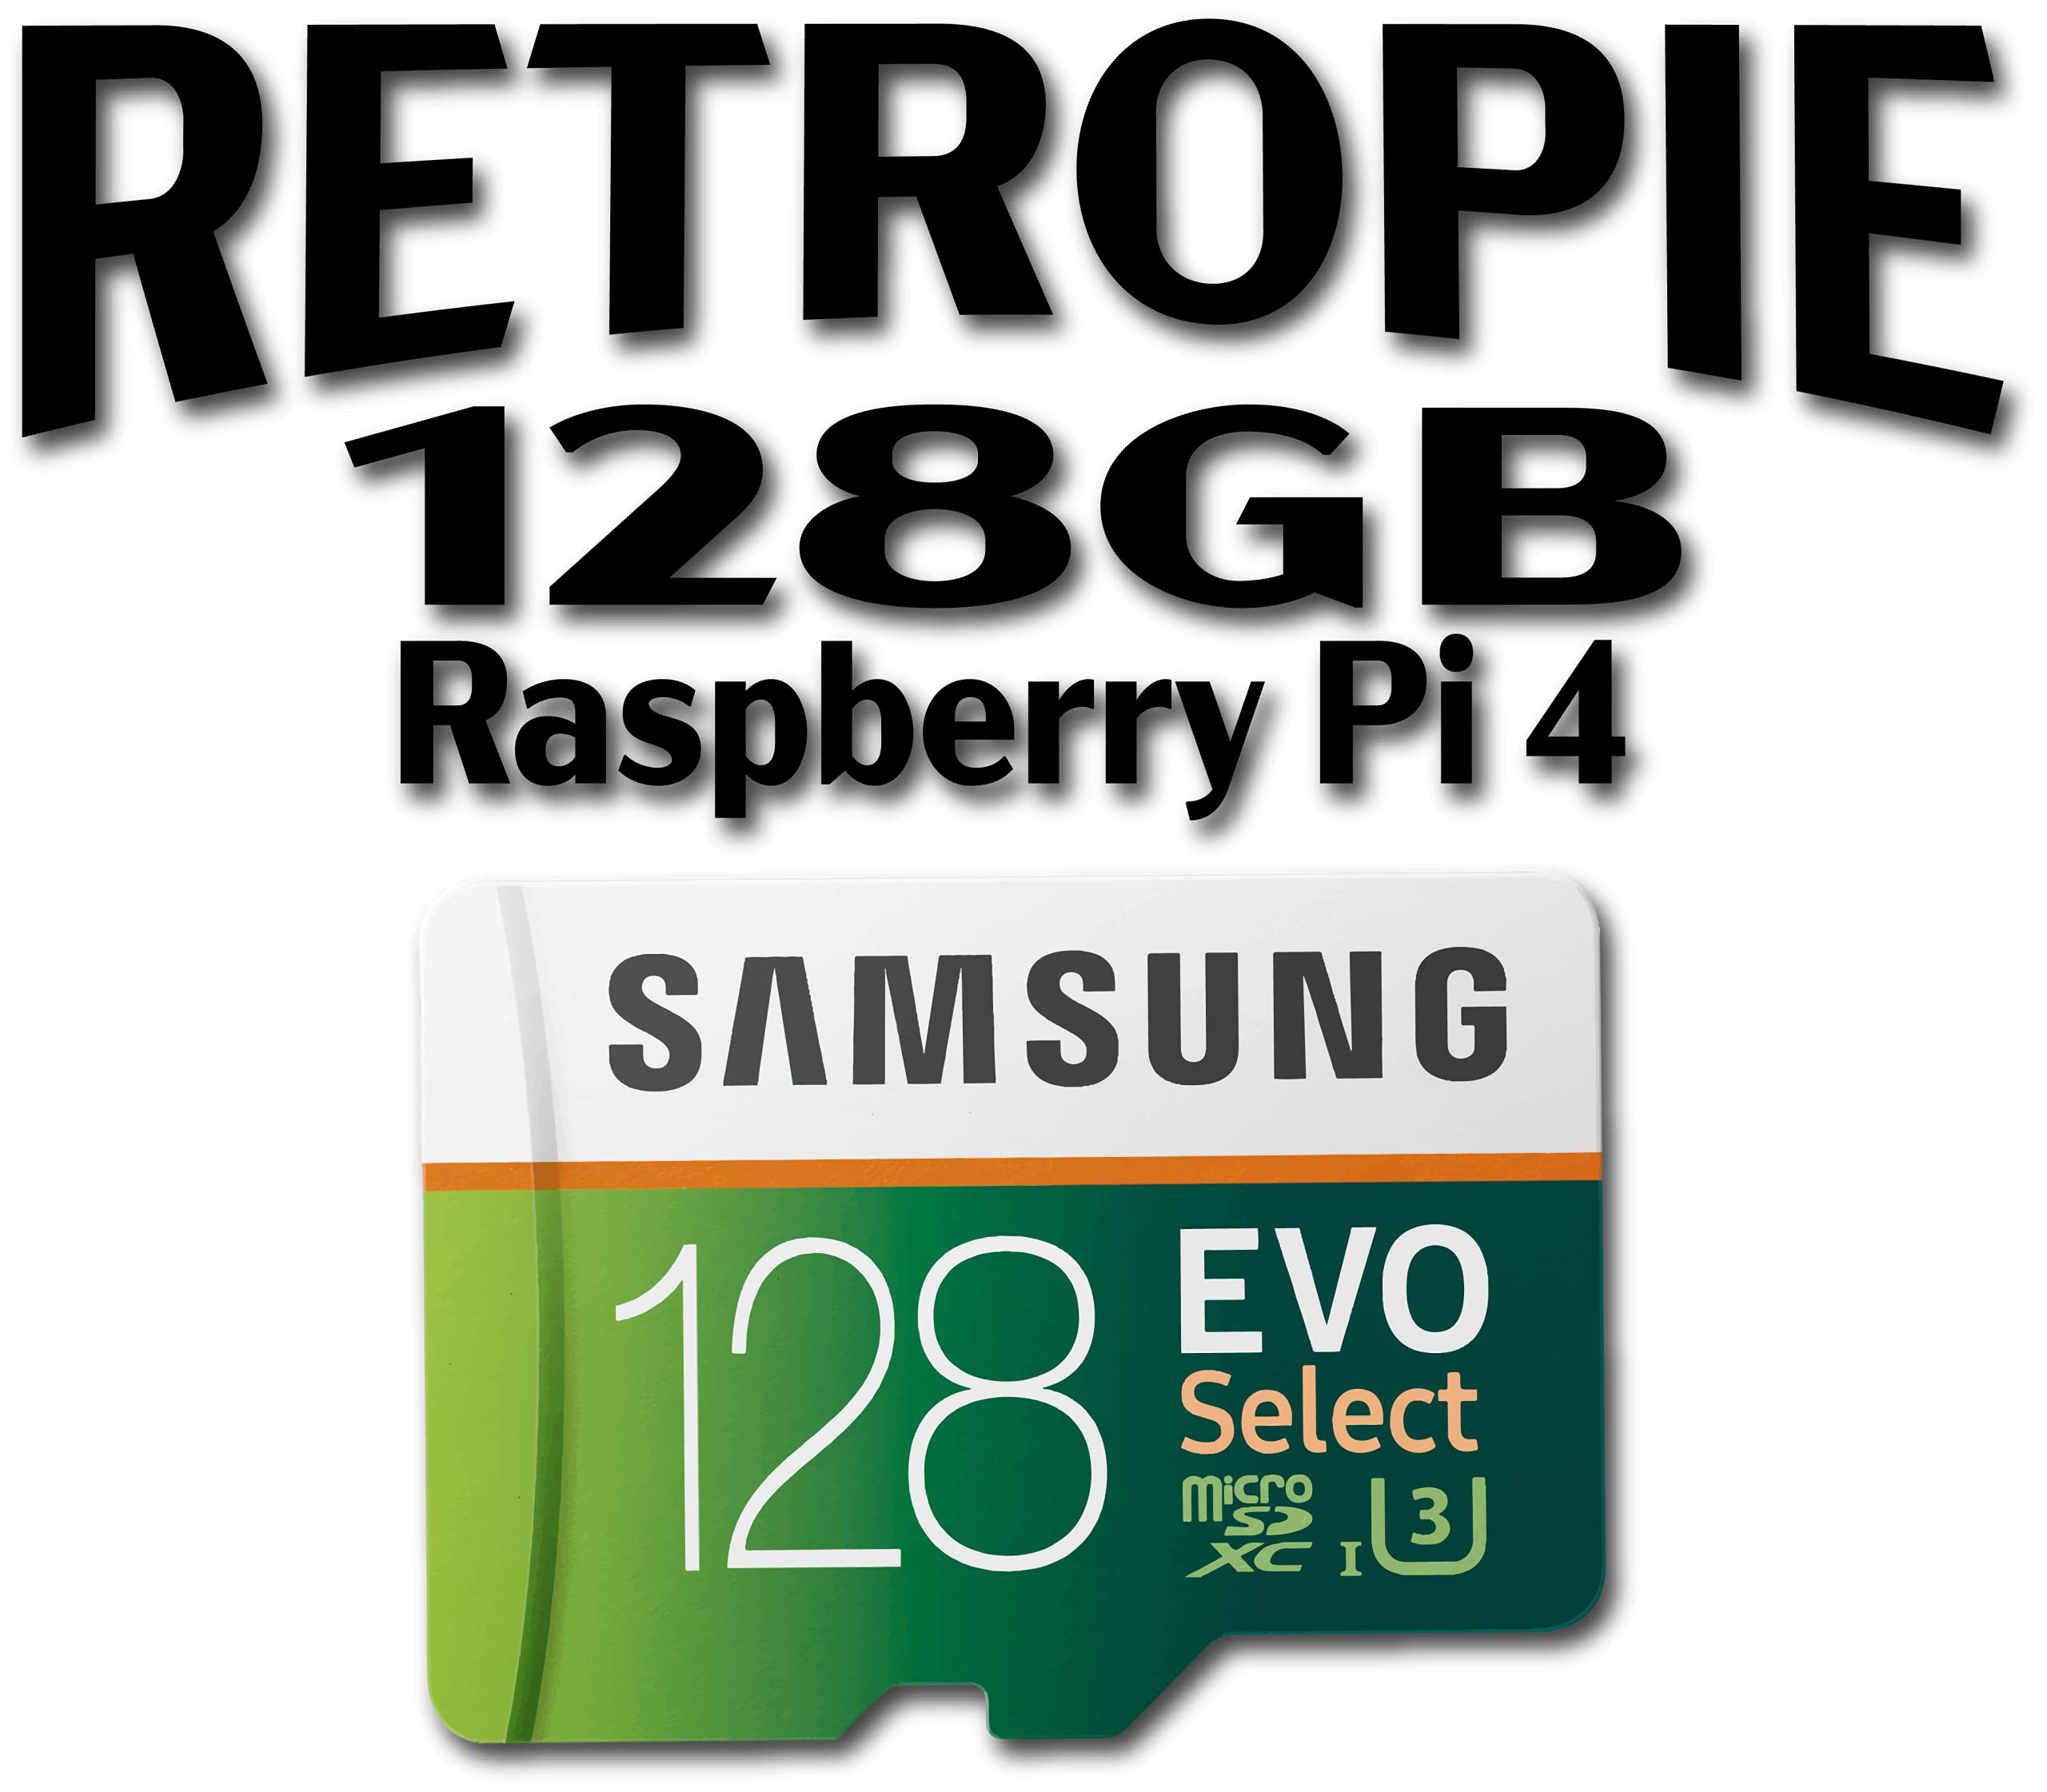 Retropie 128GB SD Card - 10,000 Games - Raspberry Pi 4 - New Ultra - PNP, Green